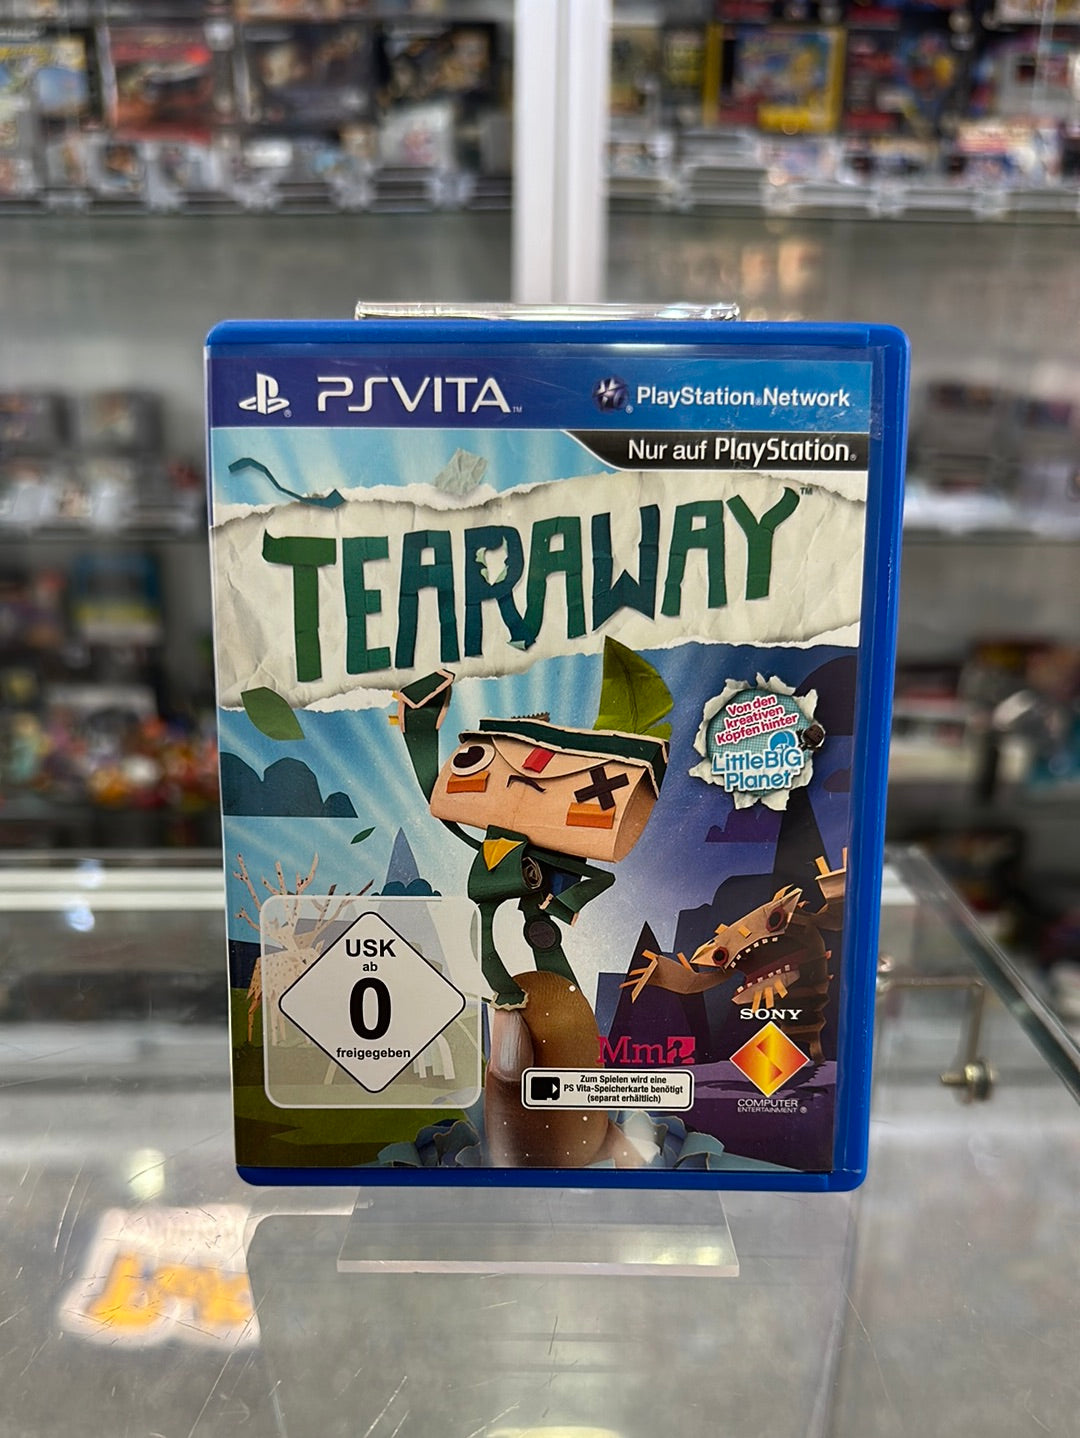 PS Vita Terraway